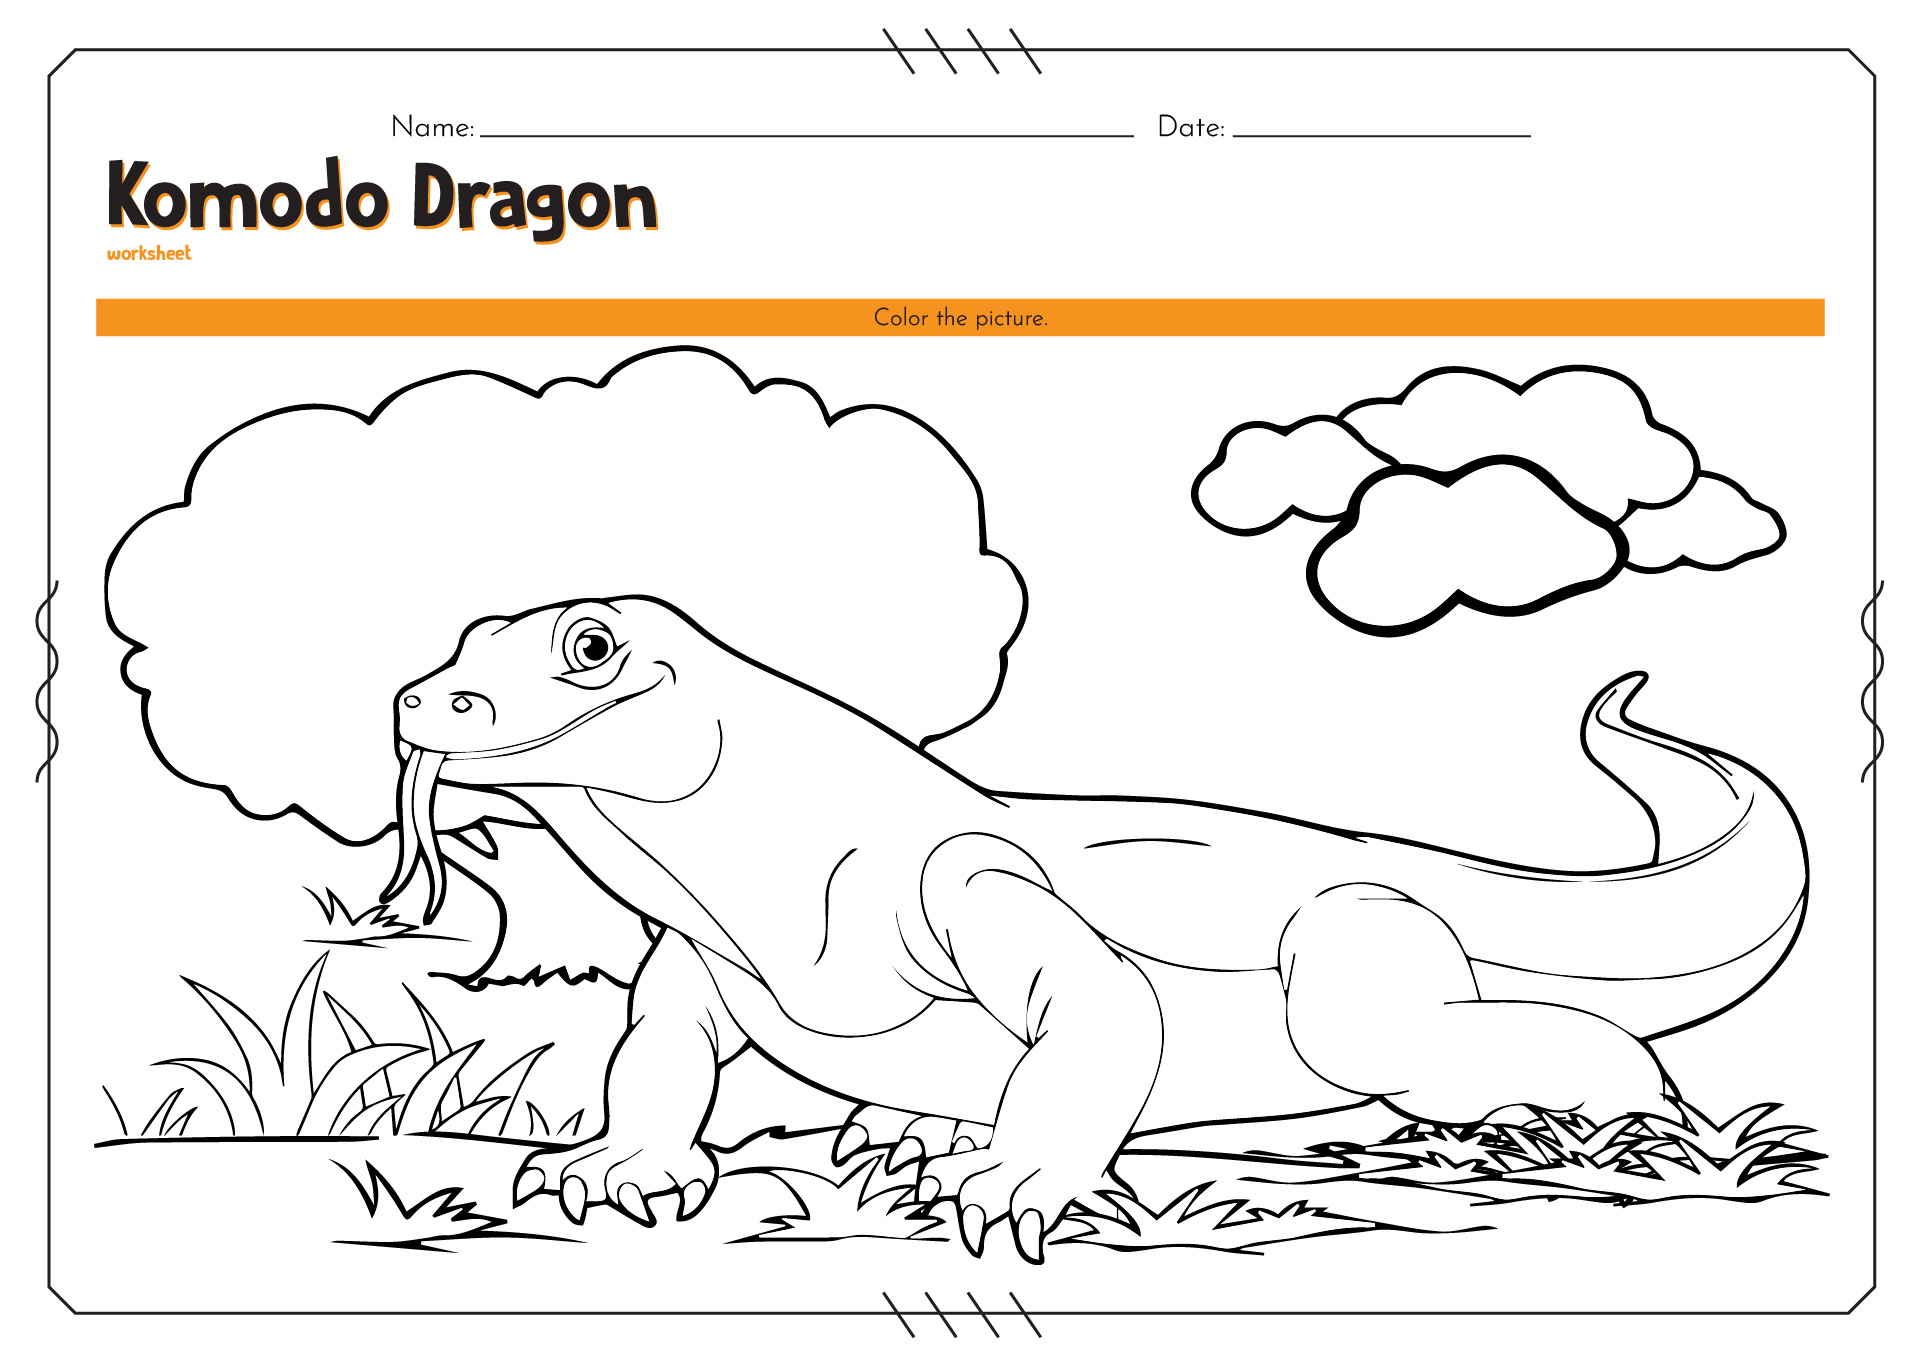 12 Reptiles Worksheets Grade 2 - Free PDF at worksheeto.com